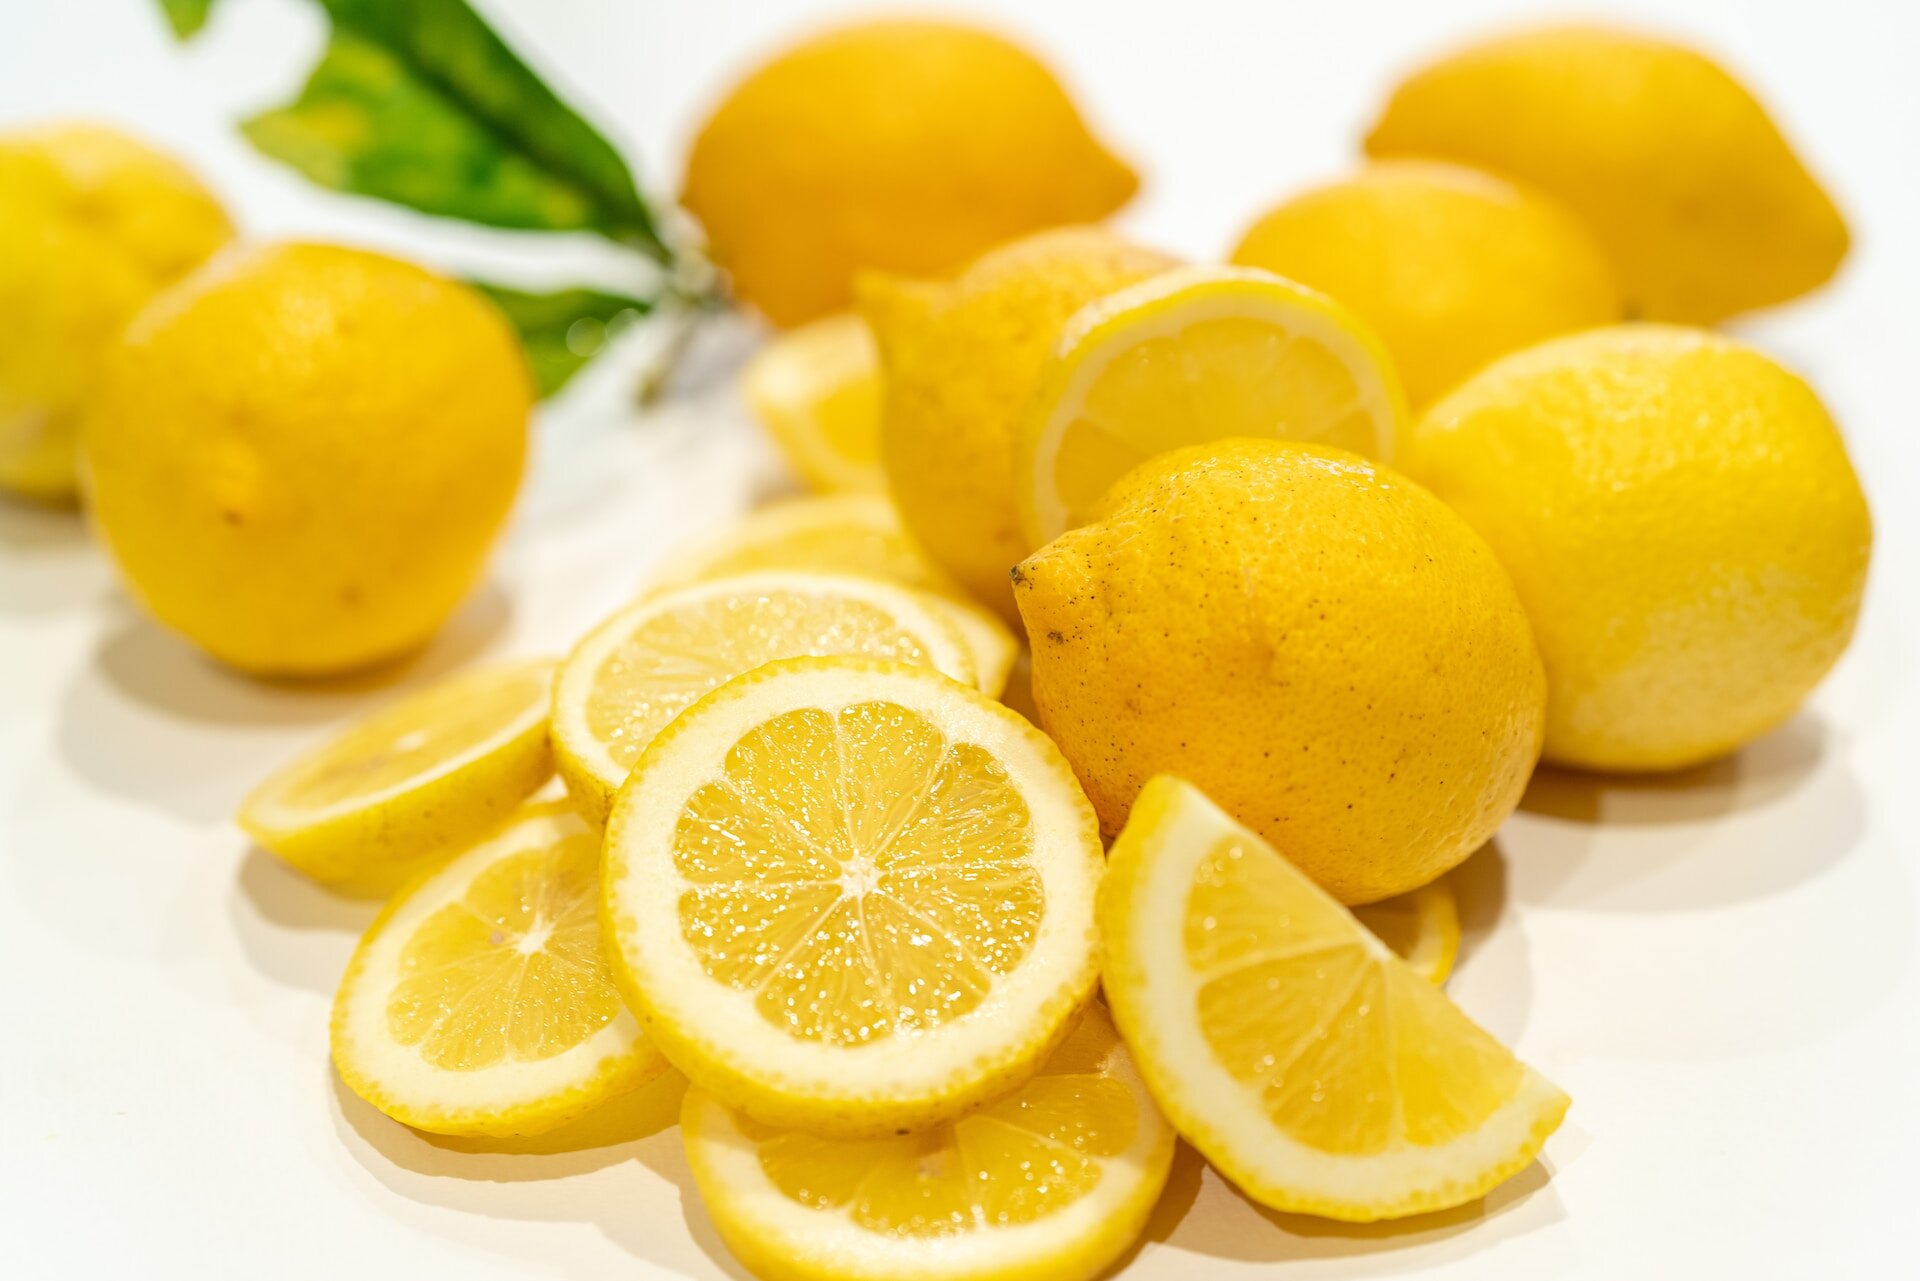 Are lemon peels good for plants?